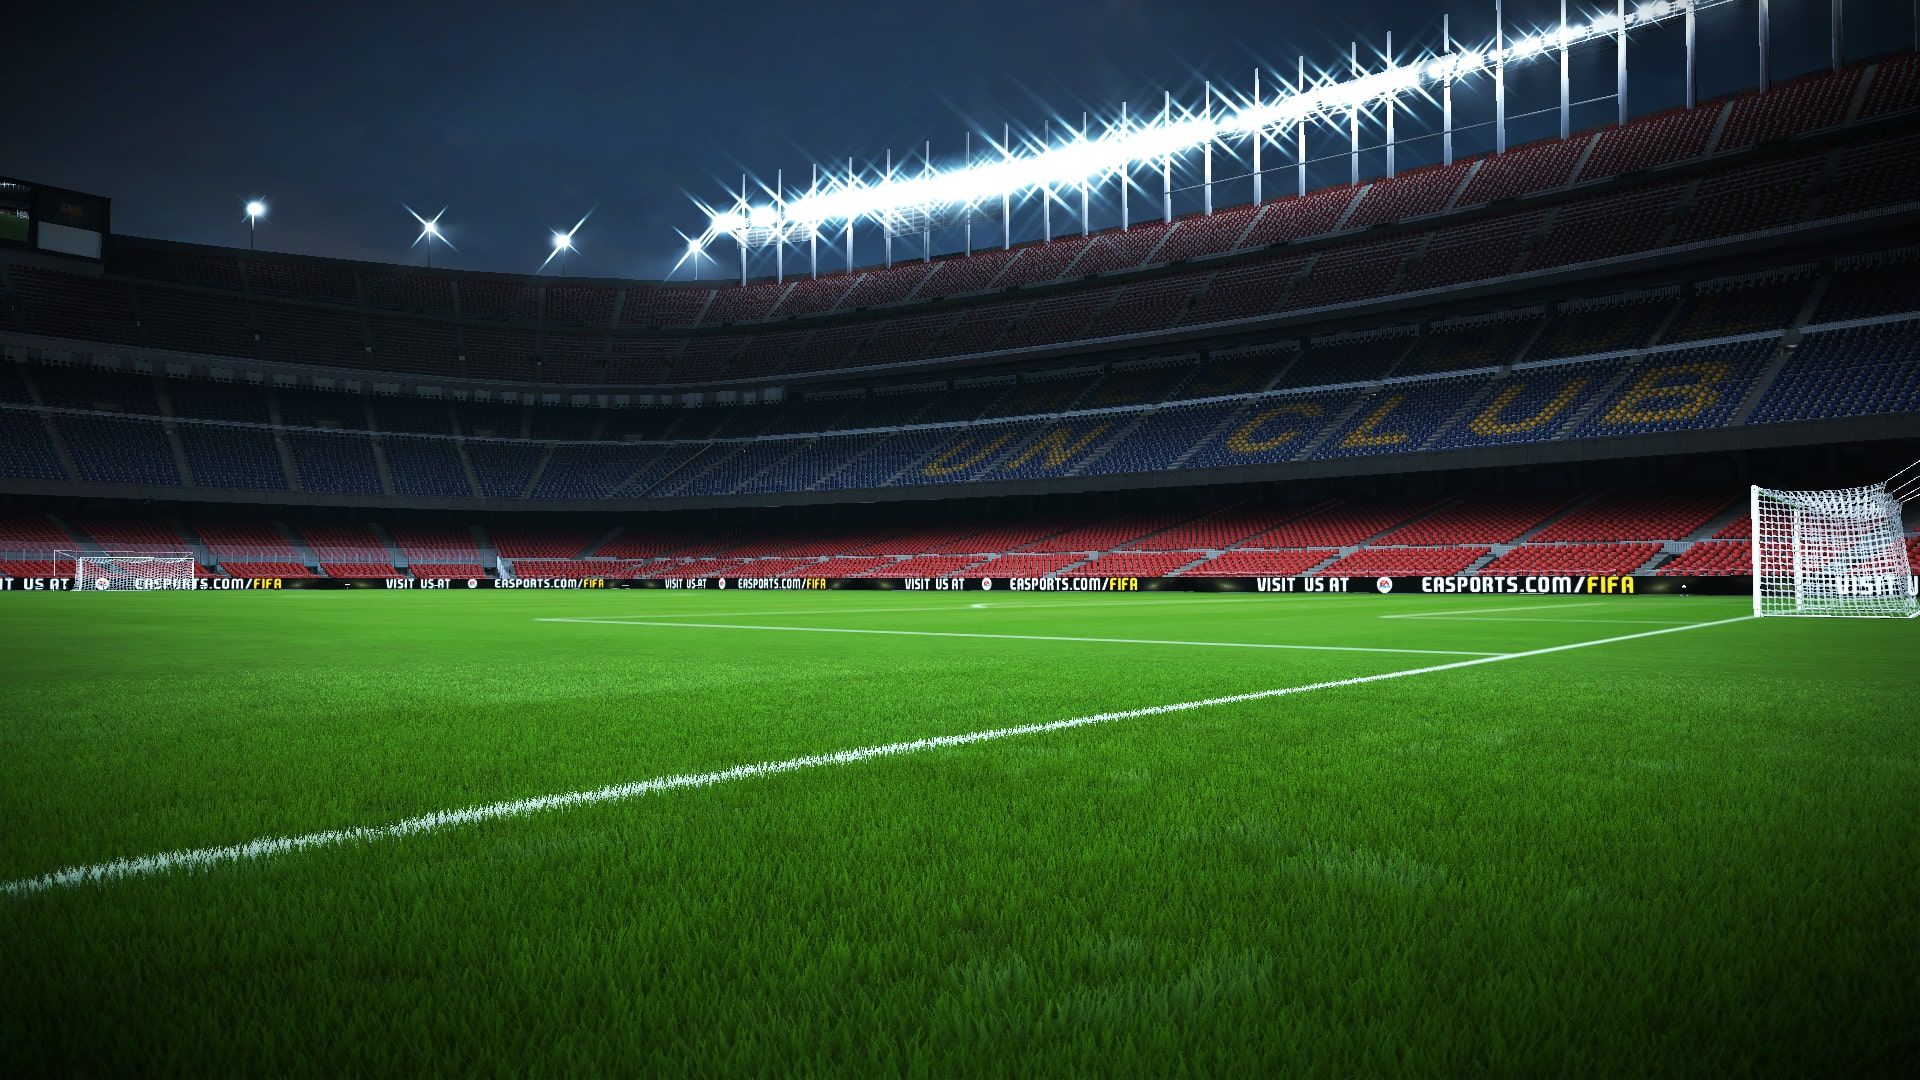 FIFA 16 cover image